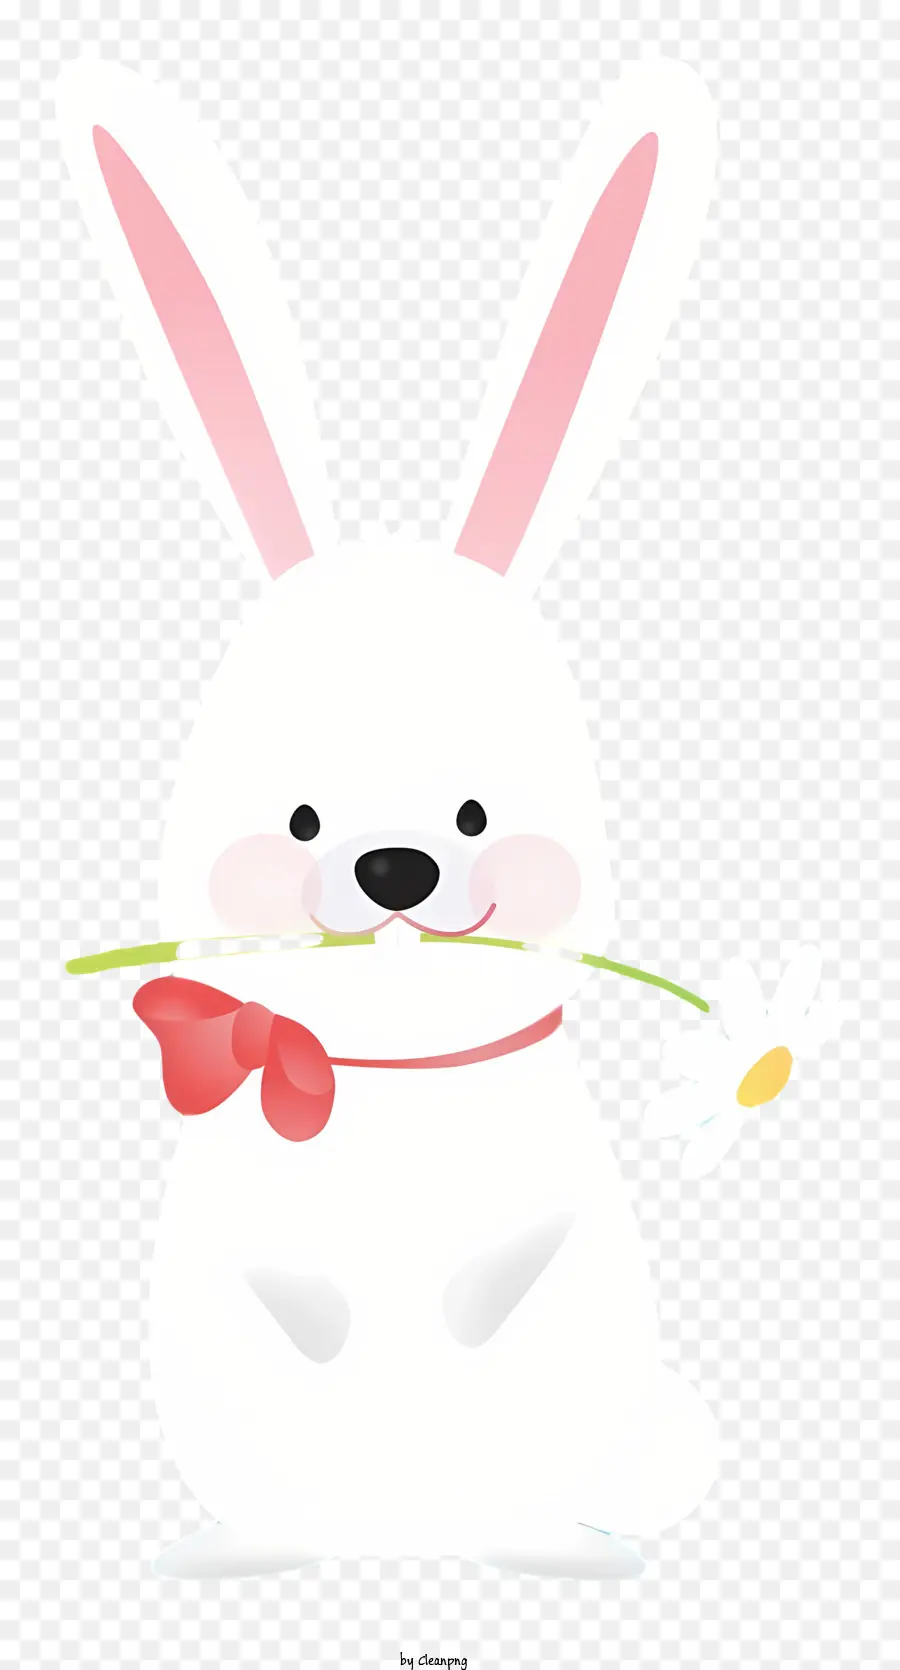 Bunny Face Bunny White Bunny Bunny mit Daisy Bunny auf schwarzem Hintergrund - White Bunny hält Gänseblümchen auf schwarzem Hintergrund